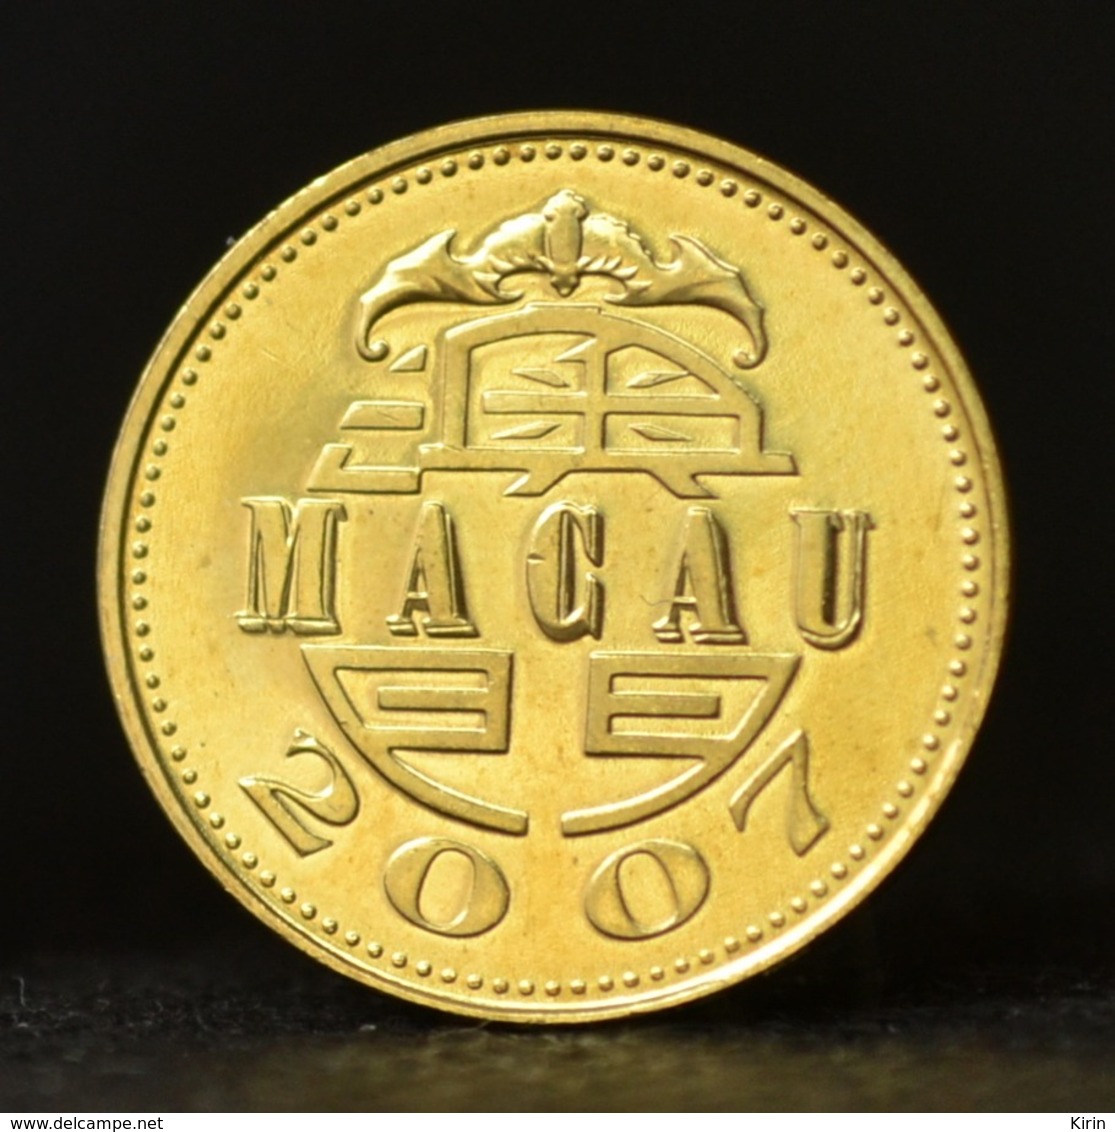 Macao Macau, China 10 Avos 1993-2007. Km70. UNC Coin - China